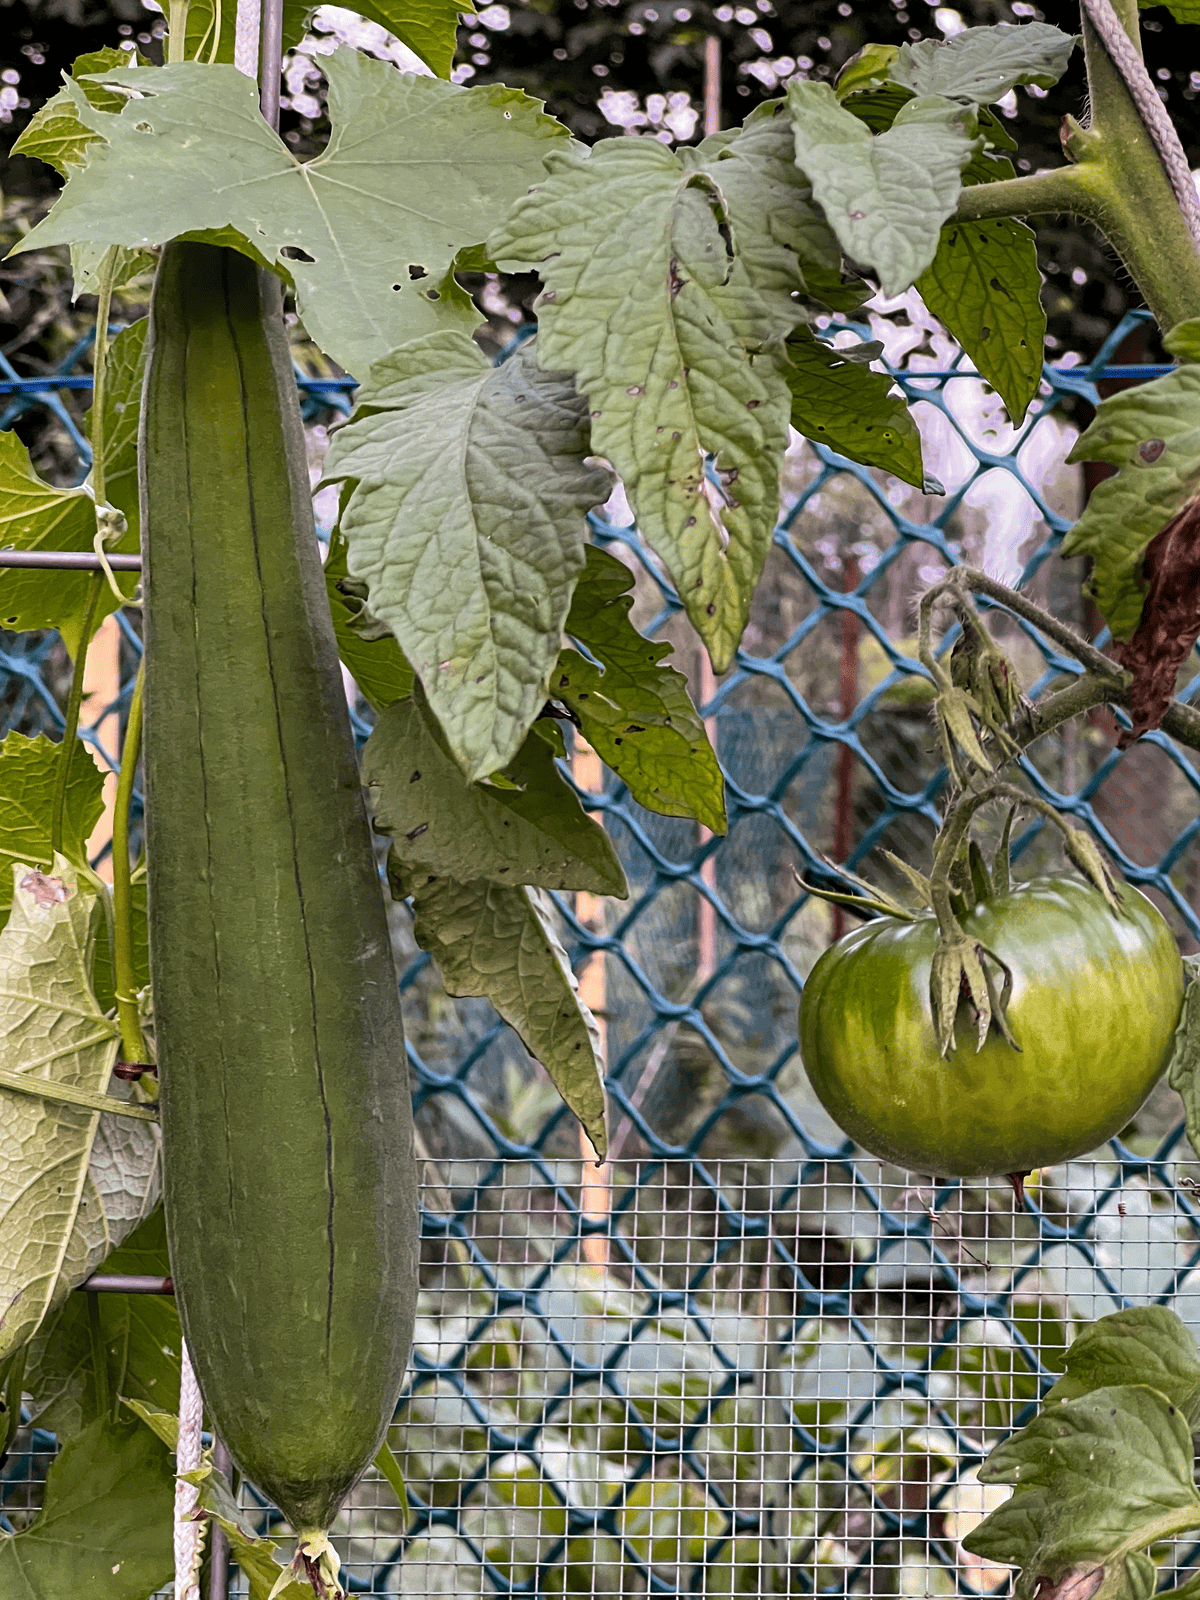 A long loofah sponge grows beside a green tomato on a fence.